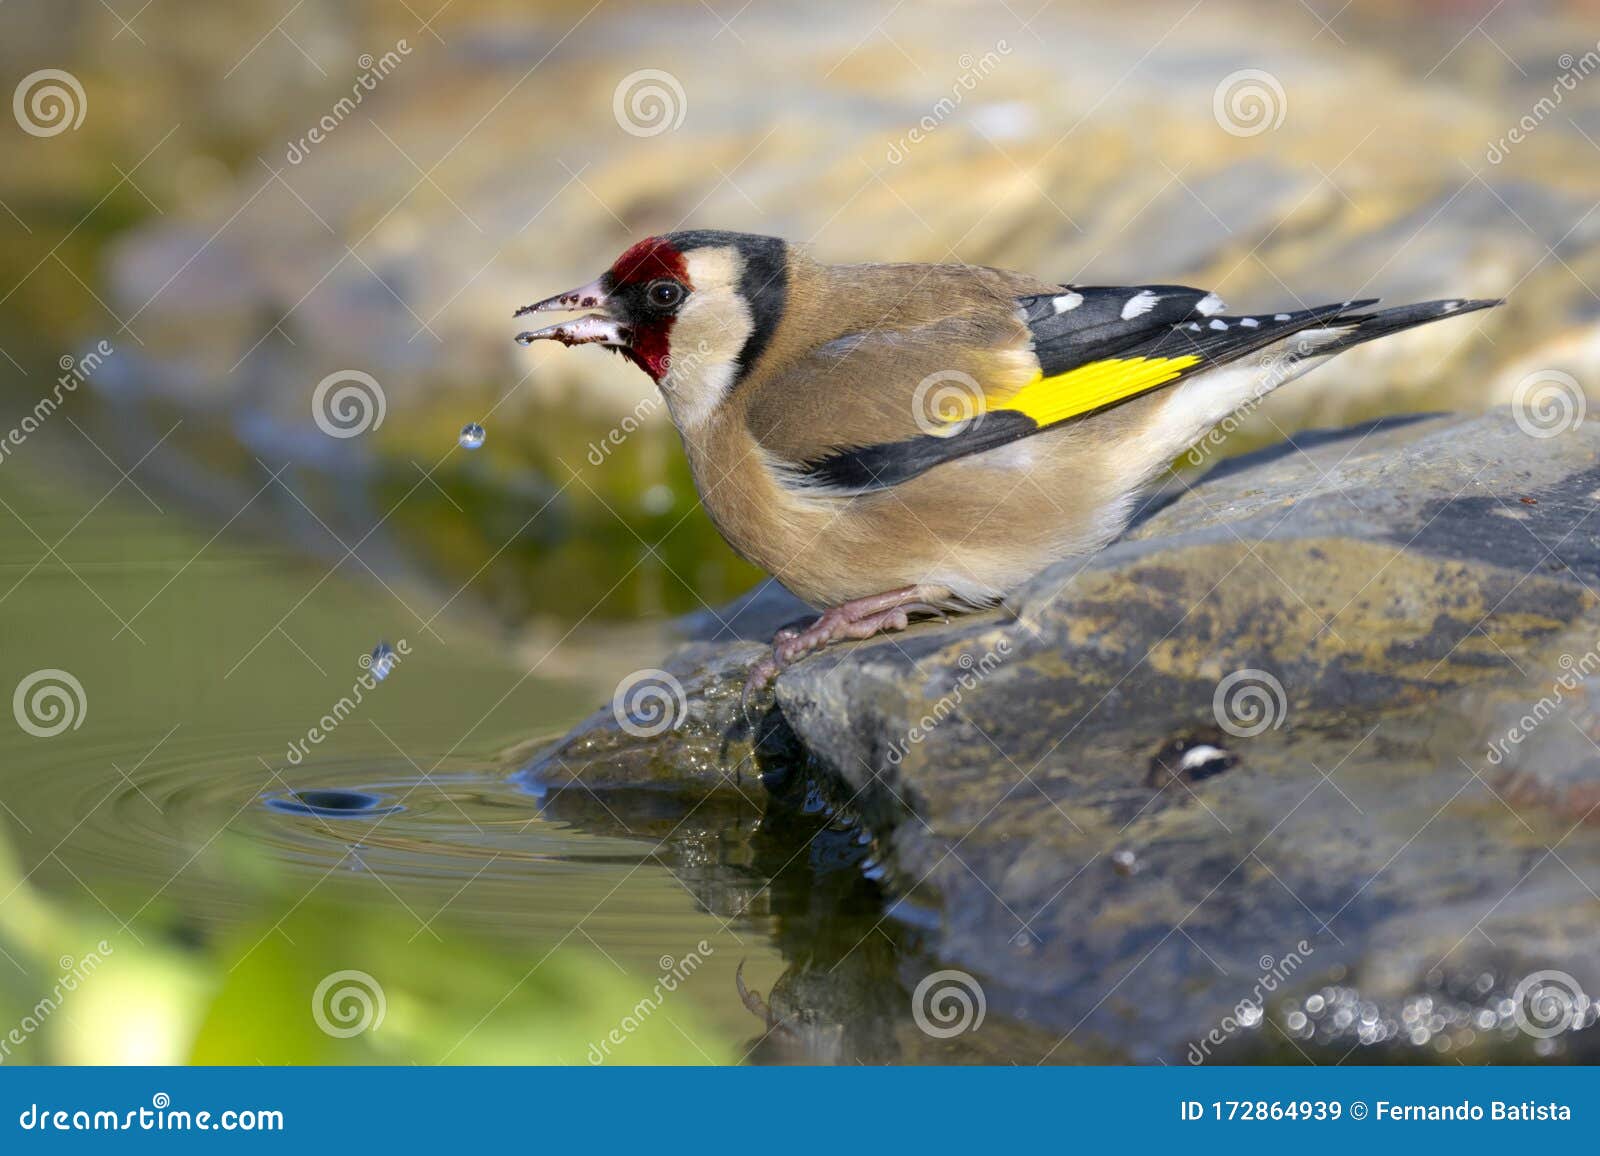 goldfinch - pintassilgo - carduelis carduelis